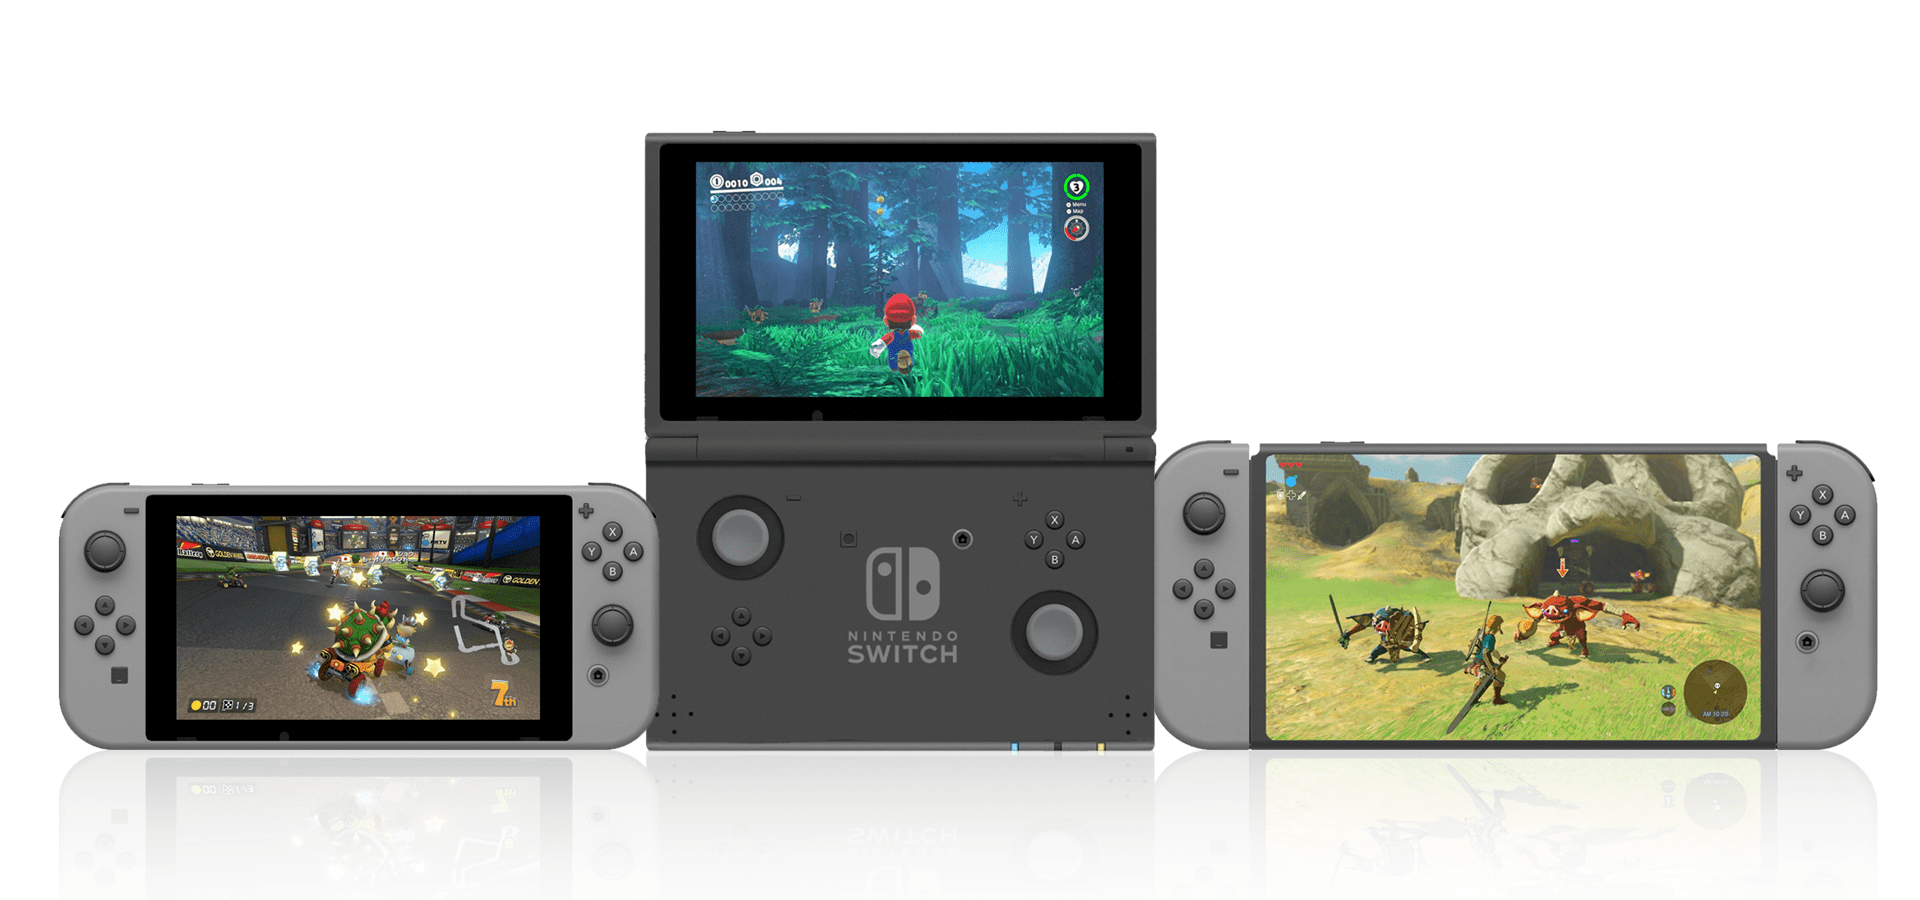 New Nintendo Switch models